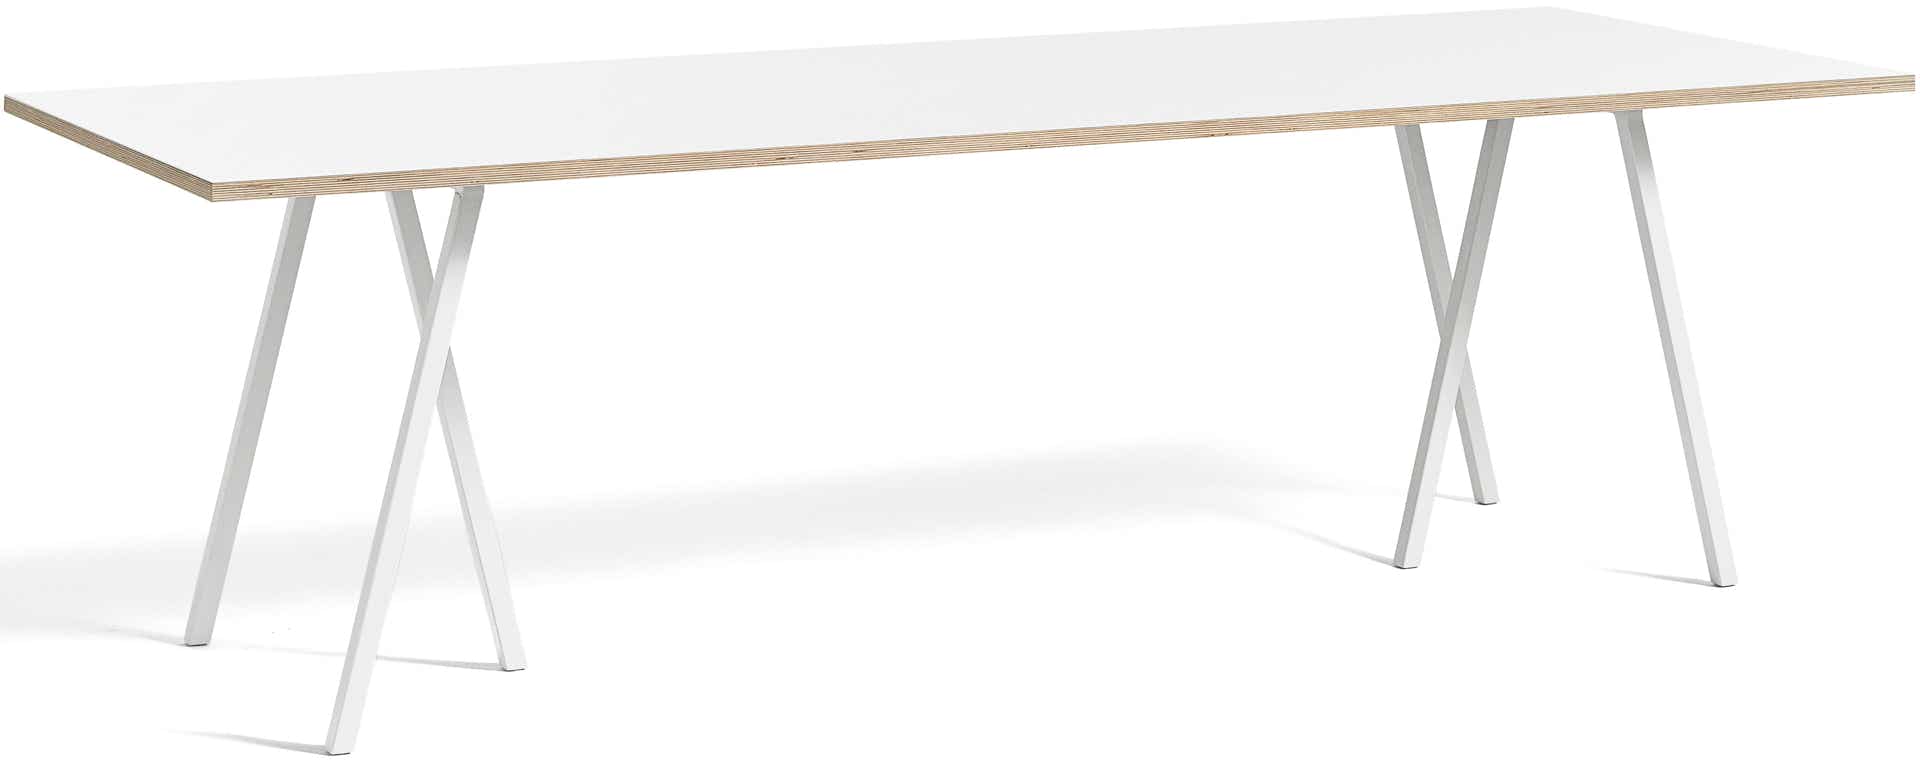 Loop Stand rectangular table  Leif JÃ¸rgensen